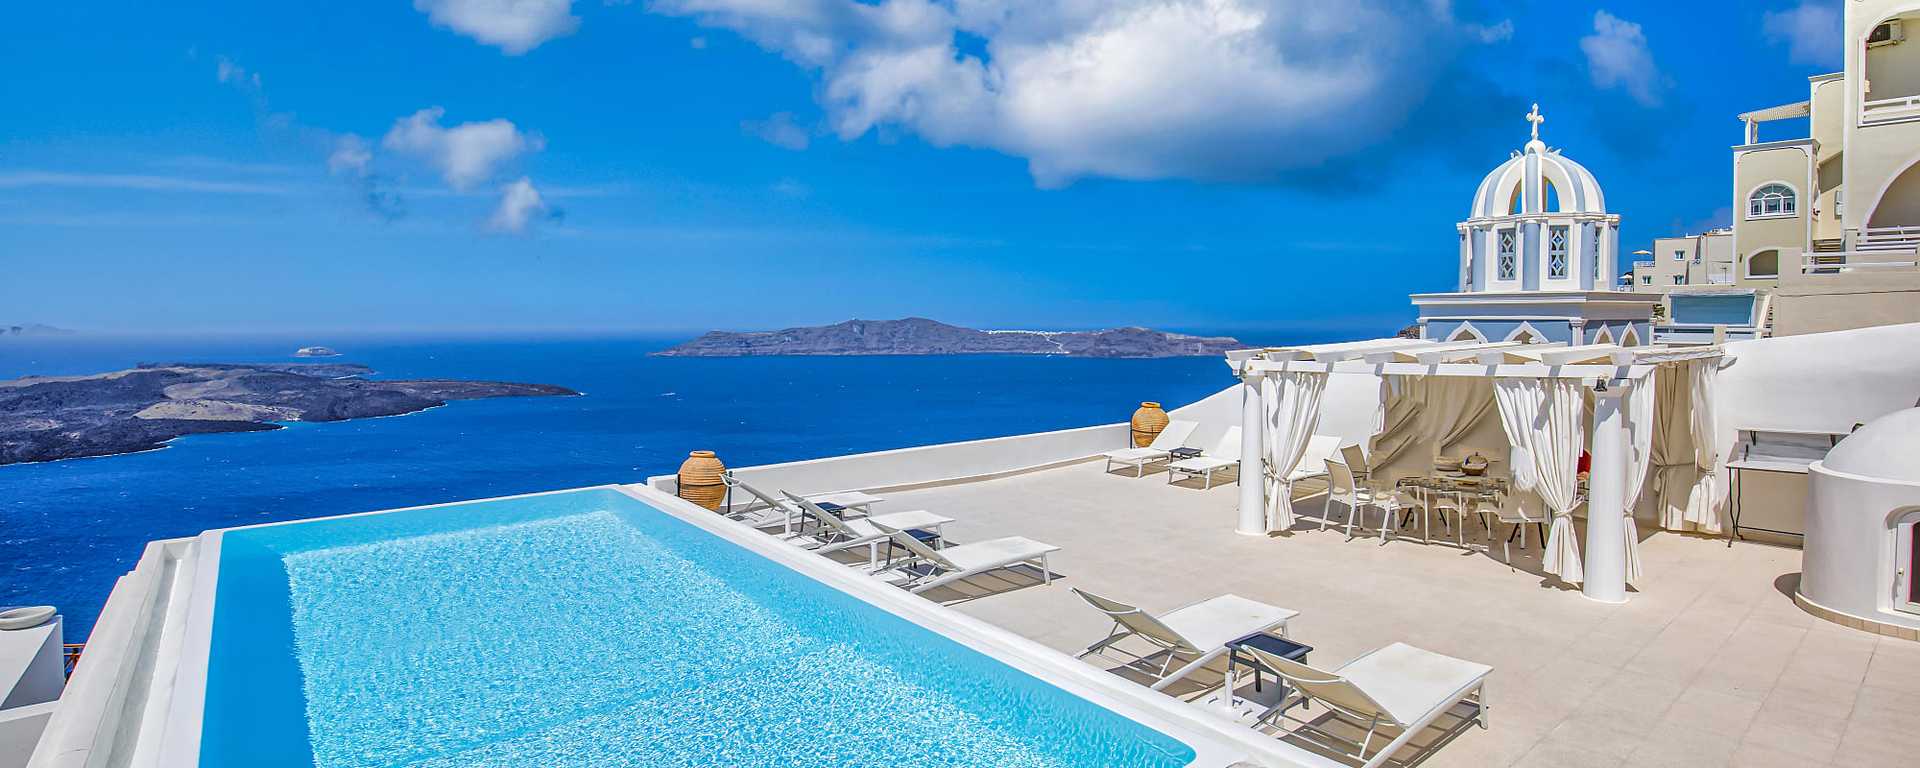 Infinity pool at luxury resort in Santorini, Greece